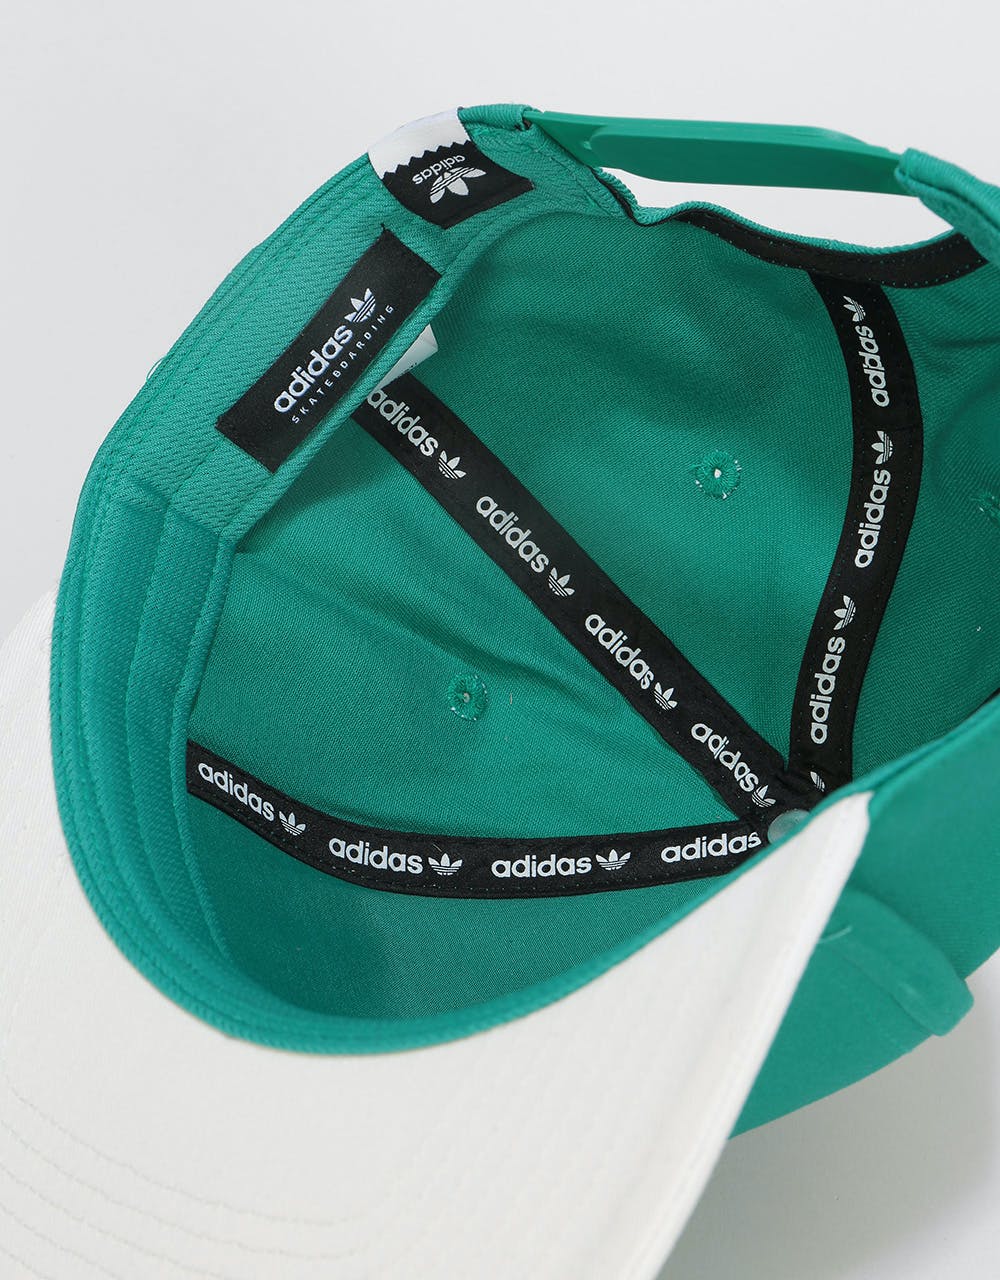 Adidas 2 Tone Snapback Cap - Active Green/Raw White